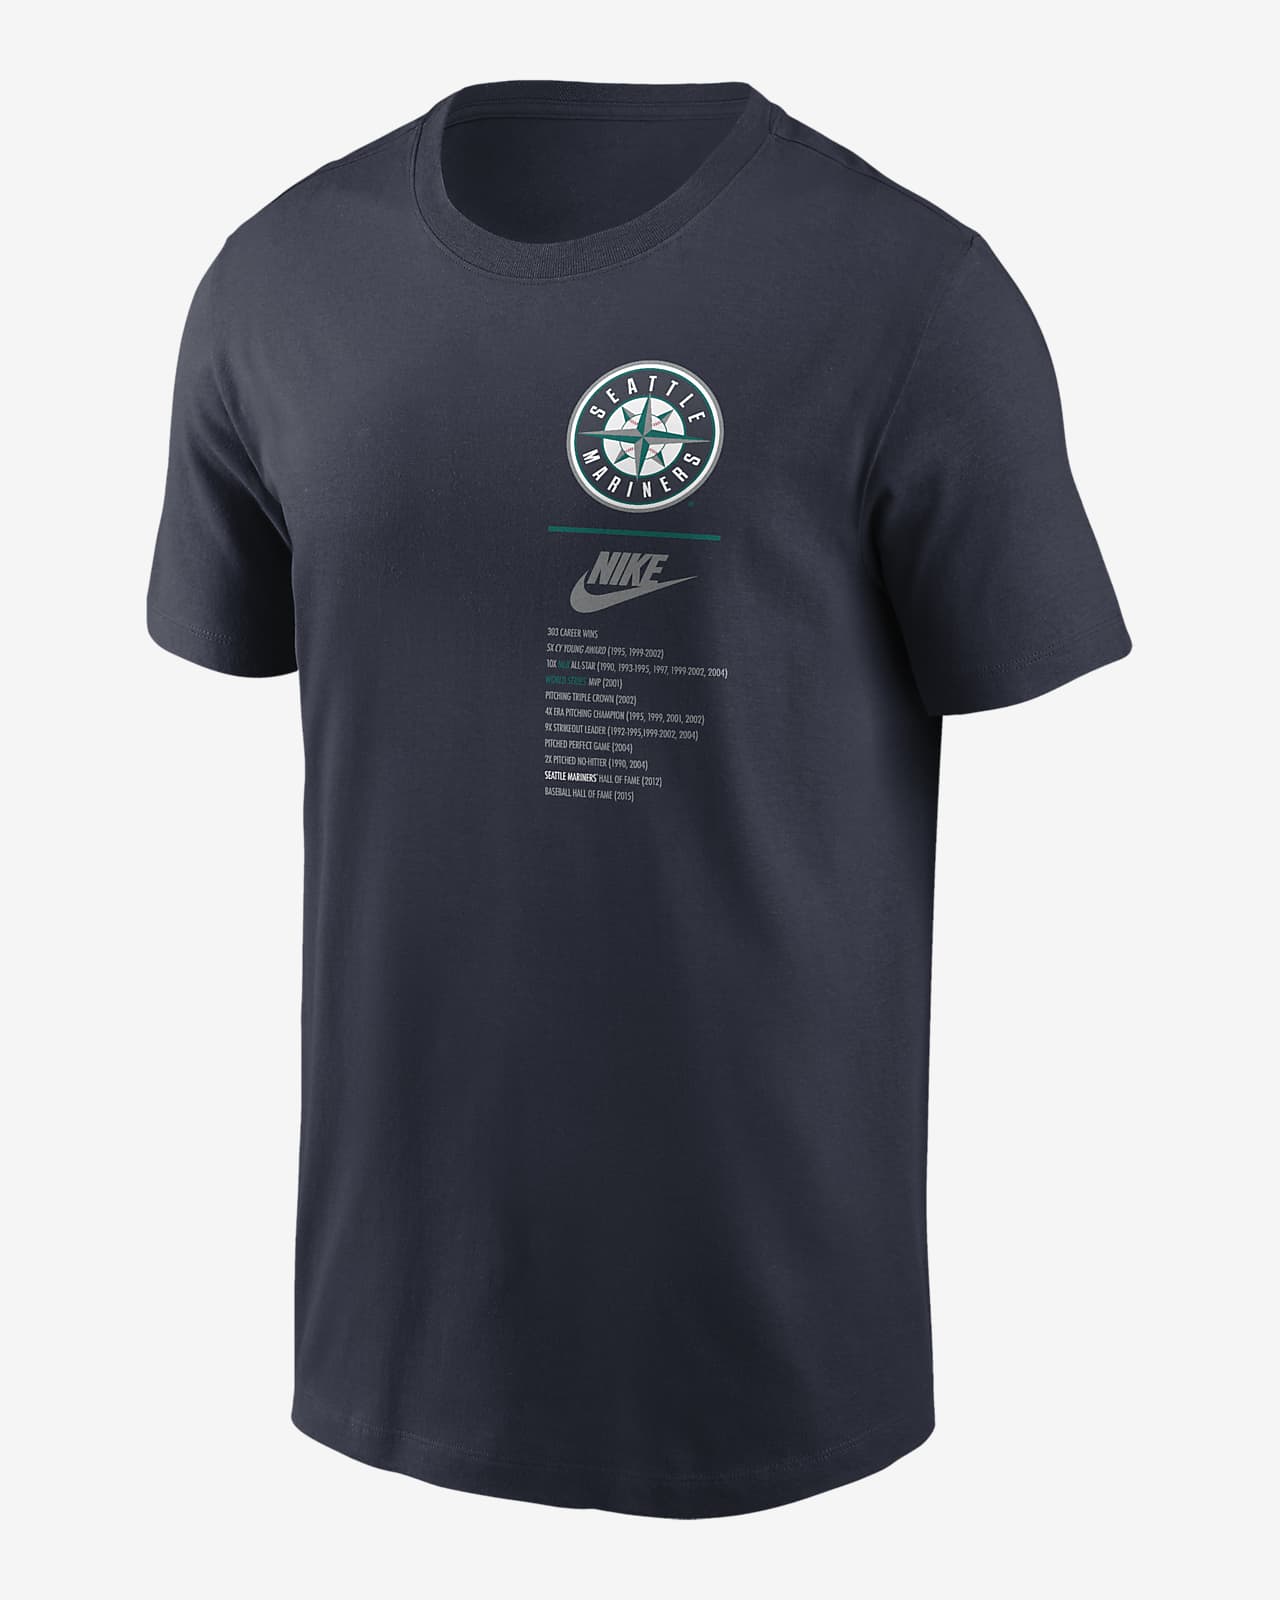 Randy Johnson Seattle Mariners MLB Shirts for sale